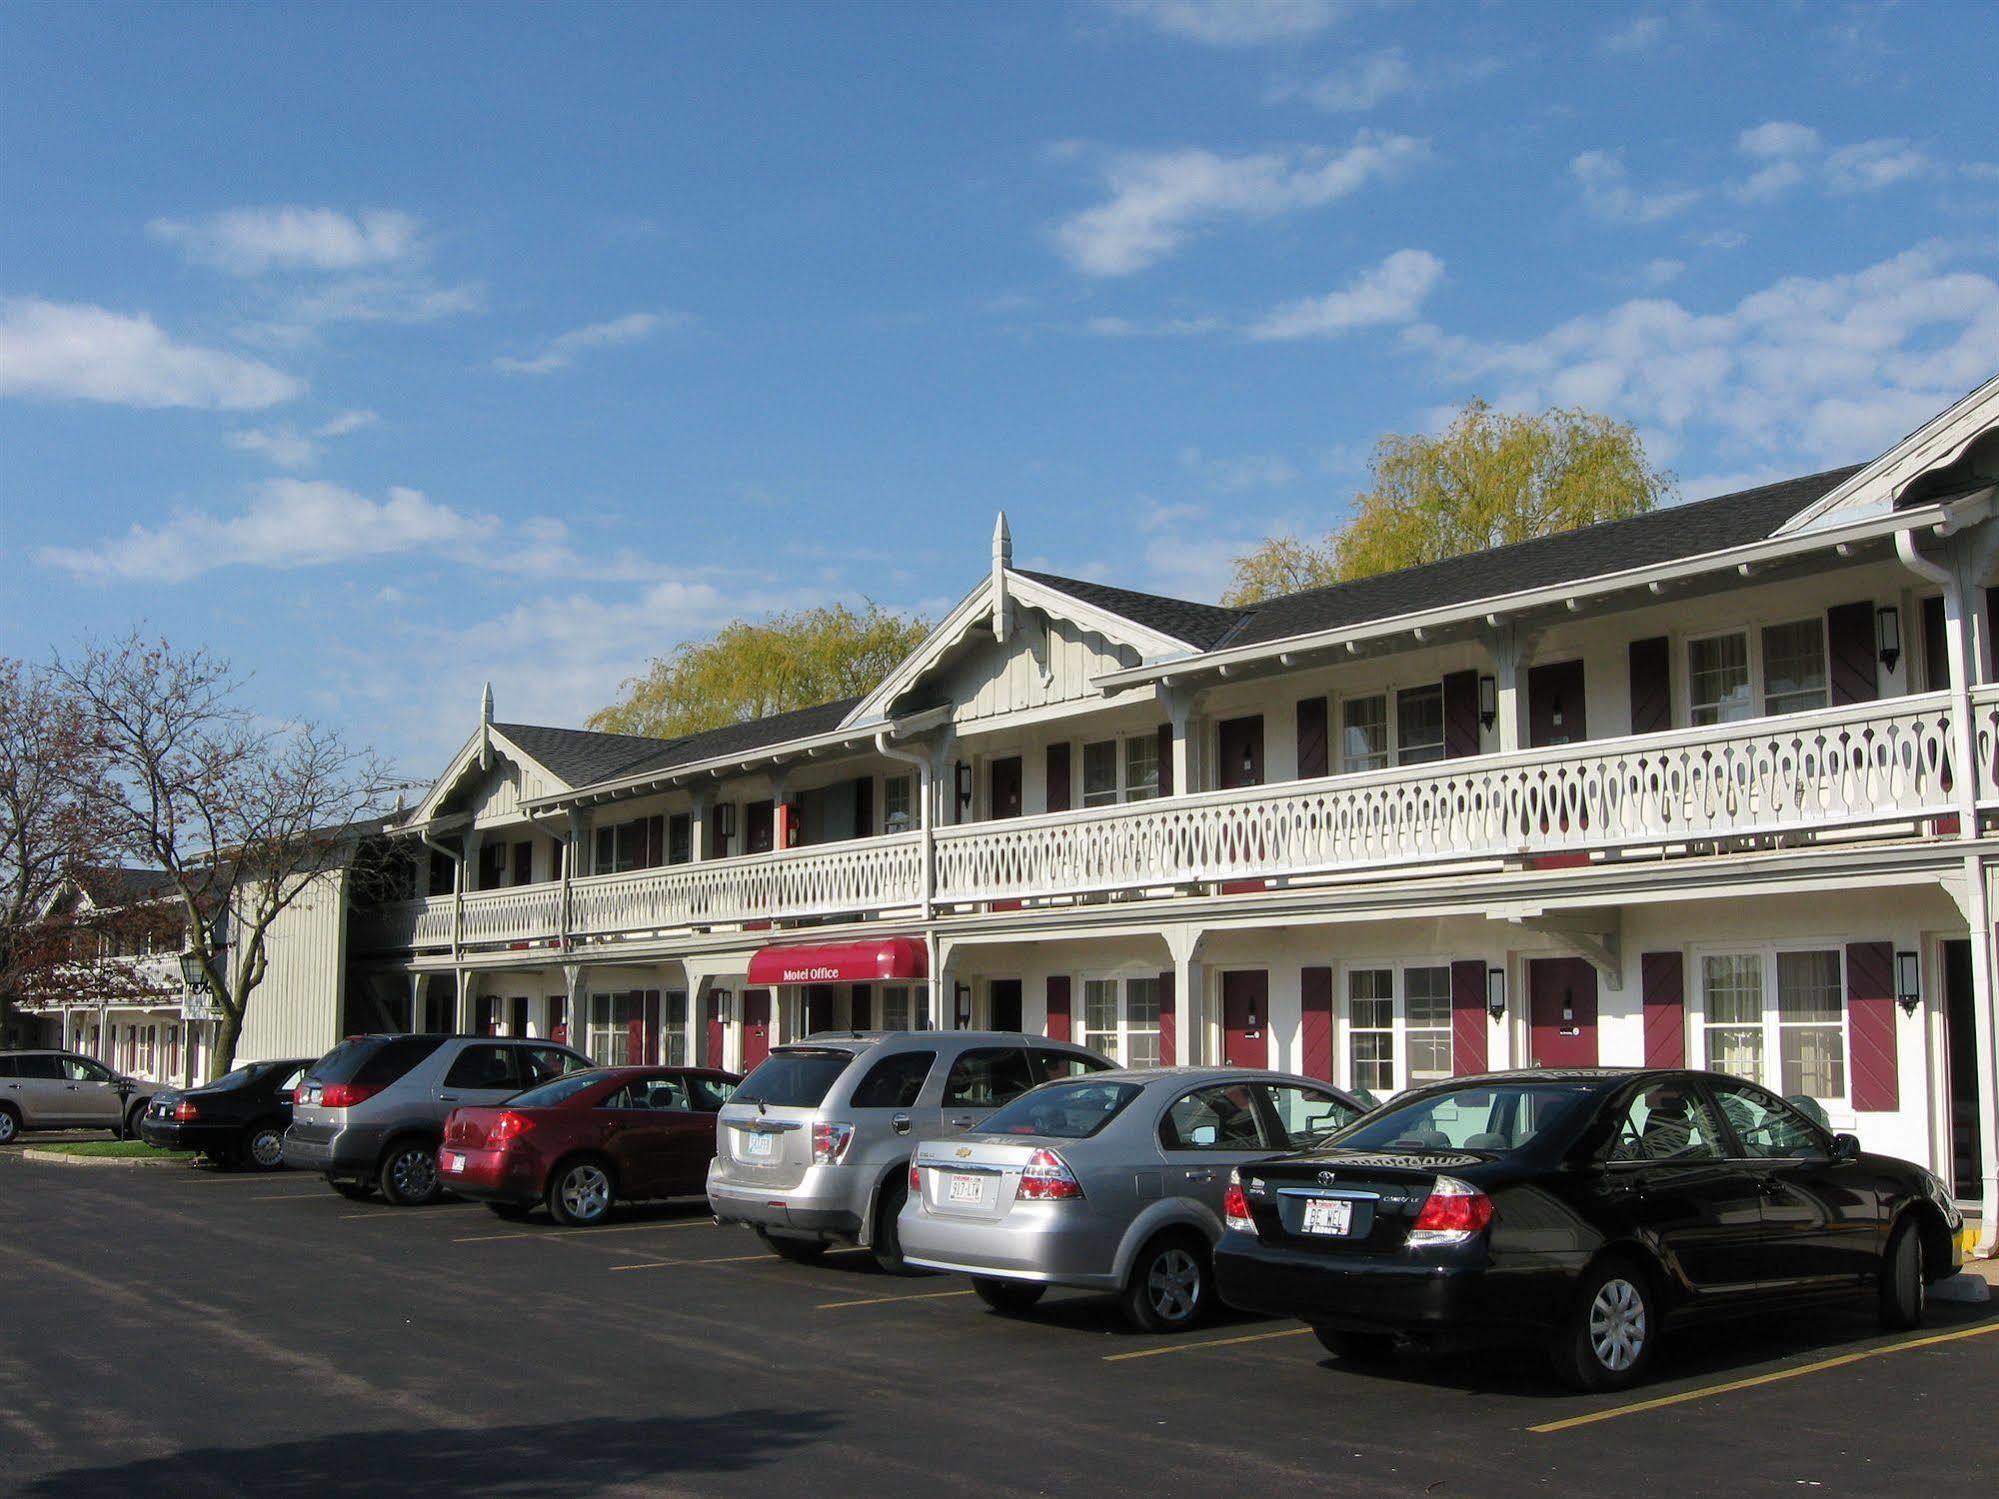 The Chalet Motel Of Mequon מראה חיצוני תמונה